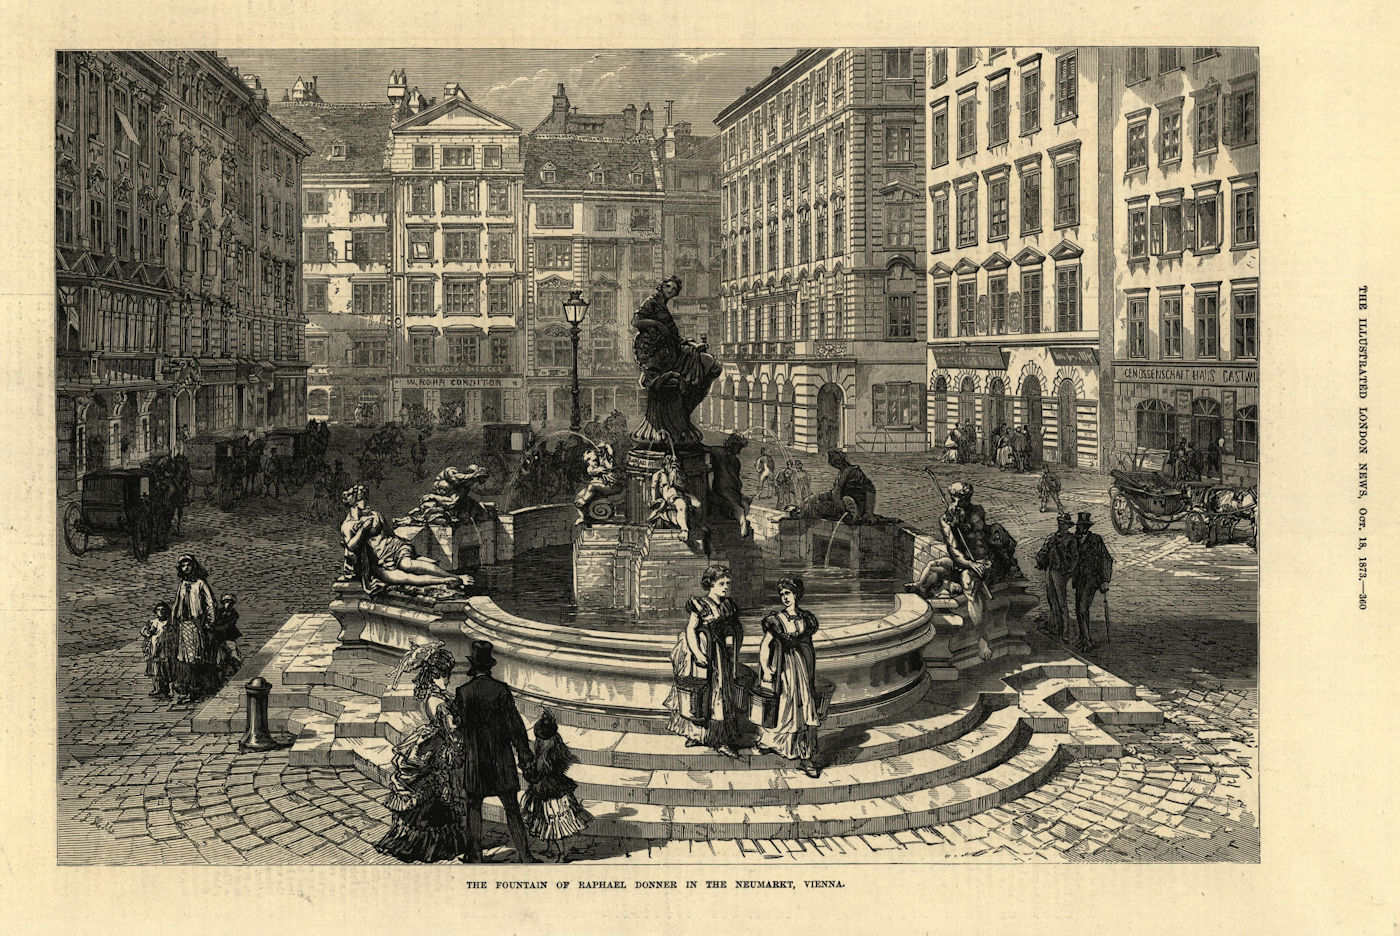 The fountain of Raphael Donner in the Neumarkt, Vienna. Austria 1873 old print